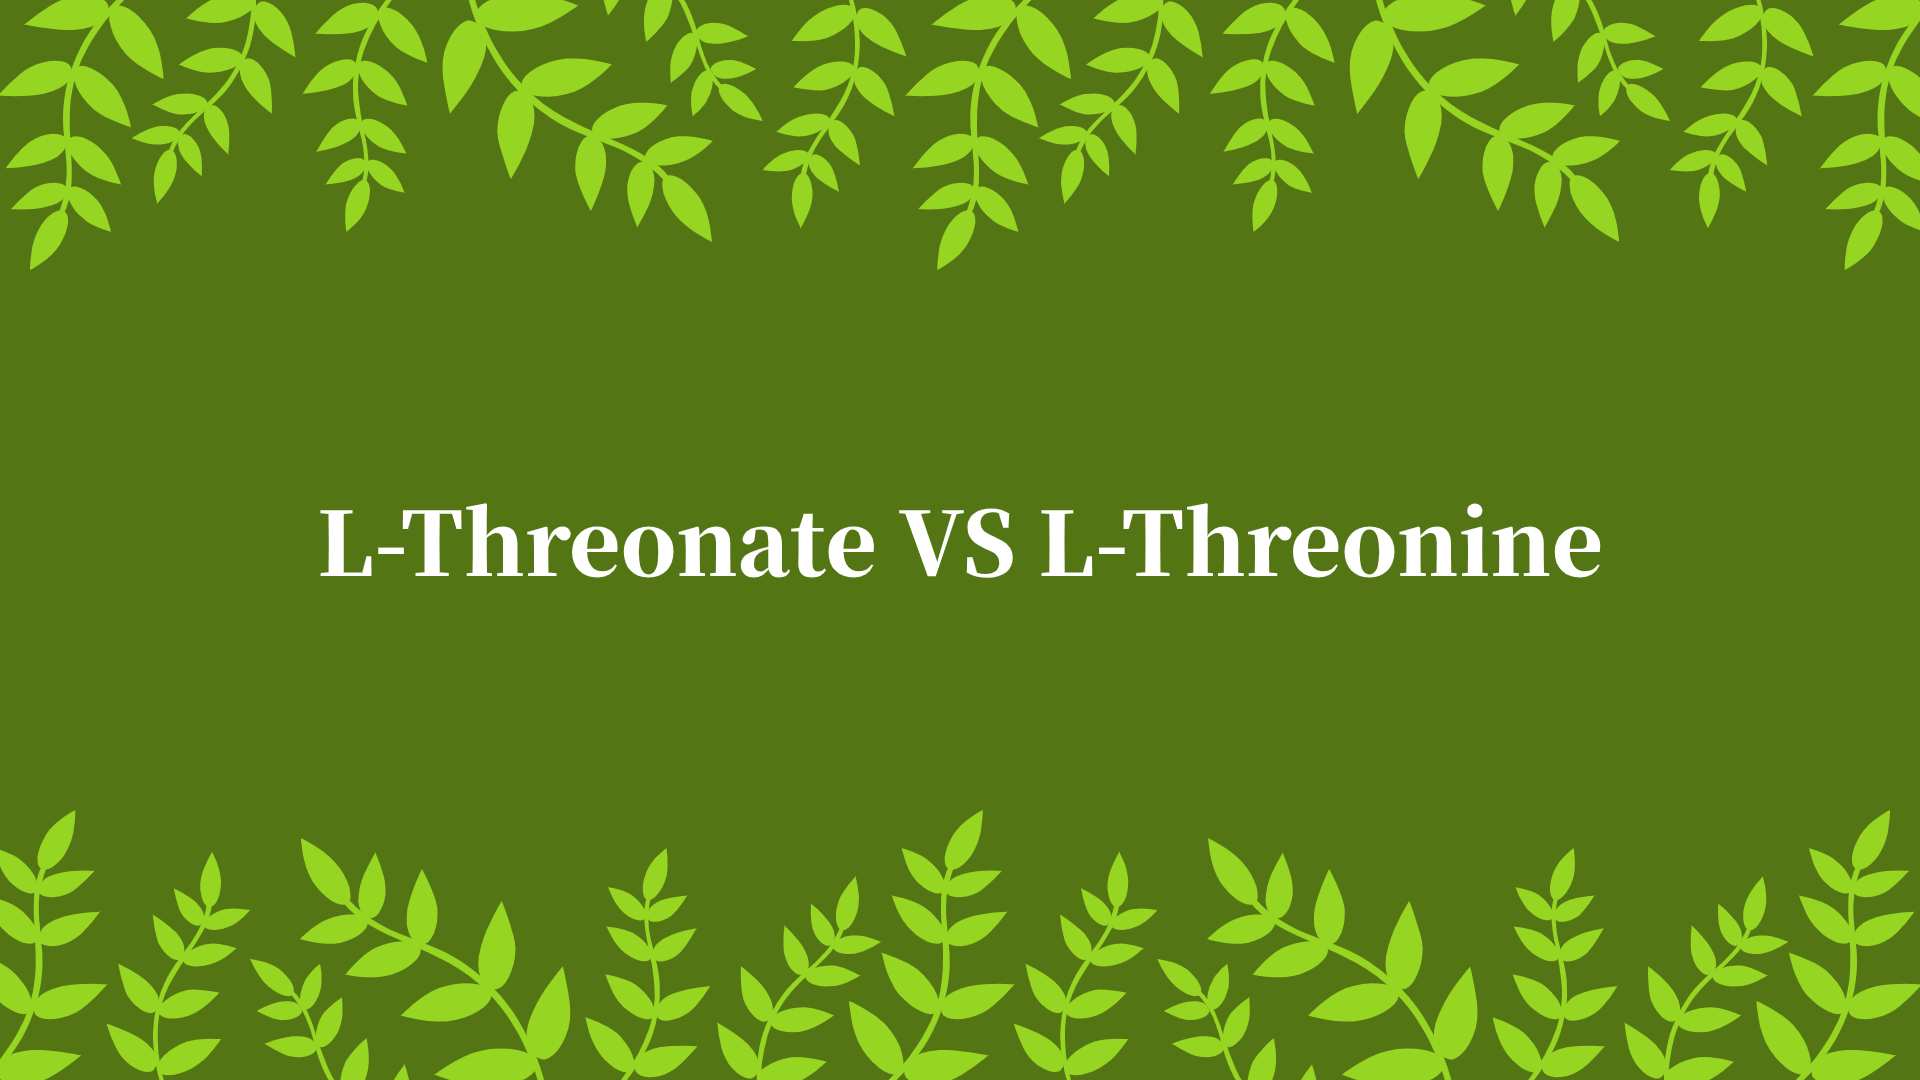 L-Threonate VS L-Threonine